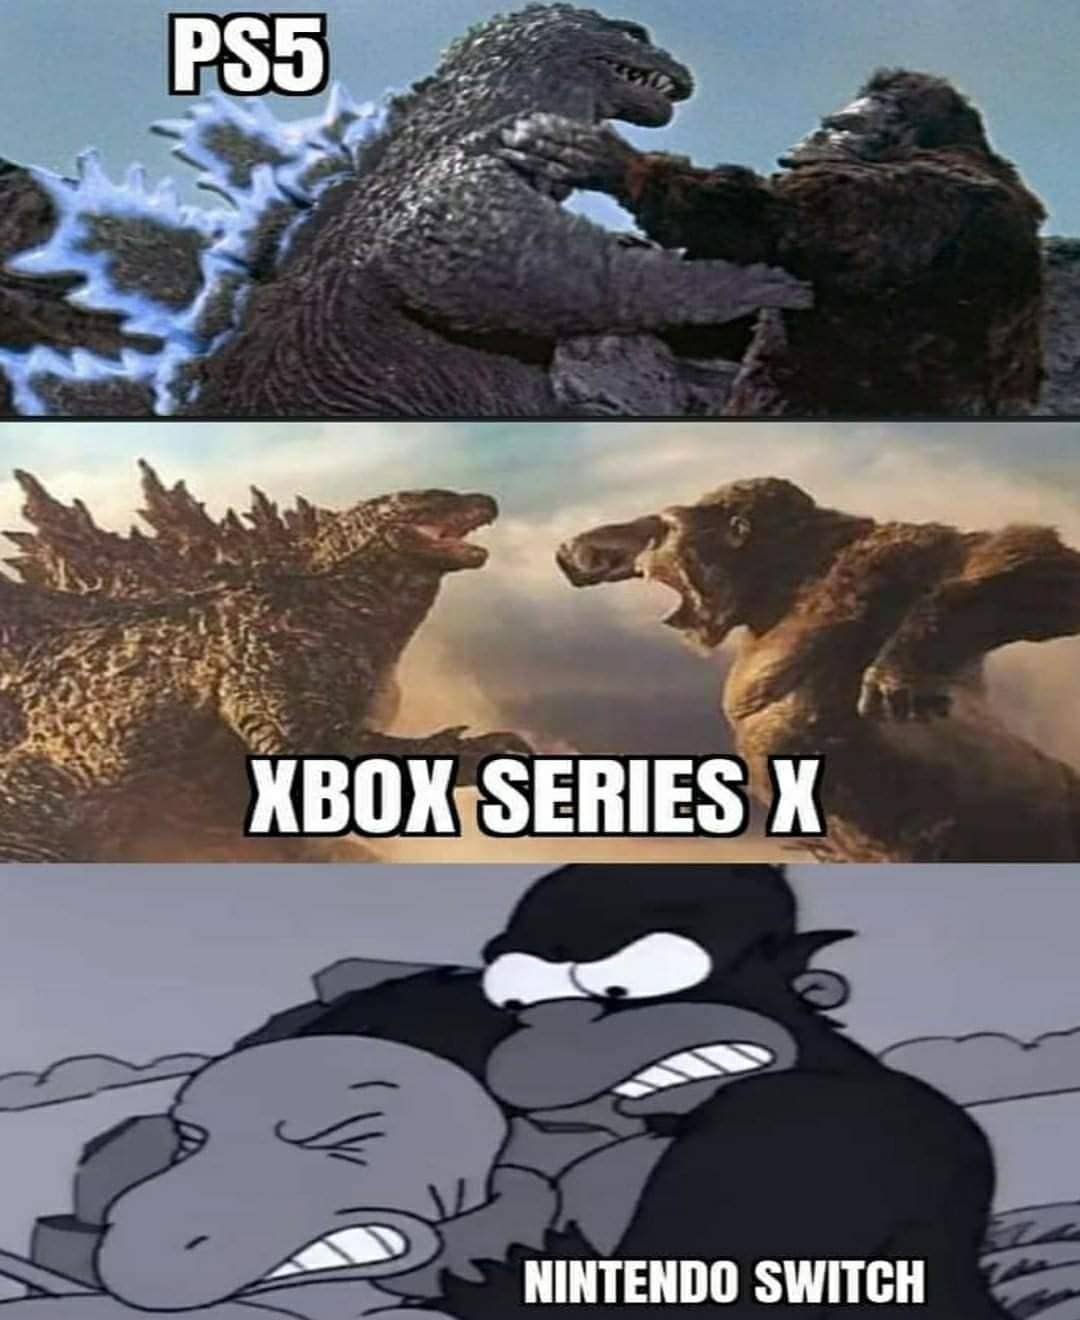 PS5.  Xbox series x.  Nintendo switch.